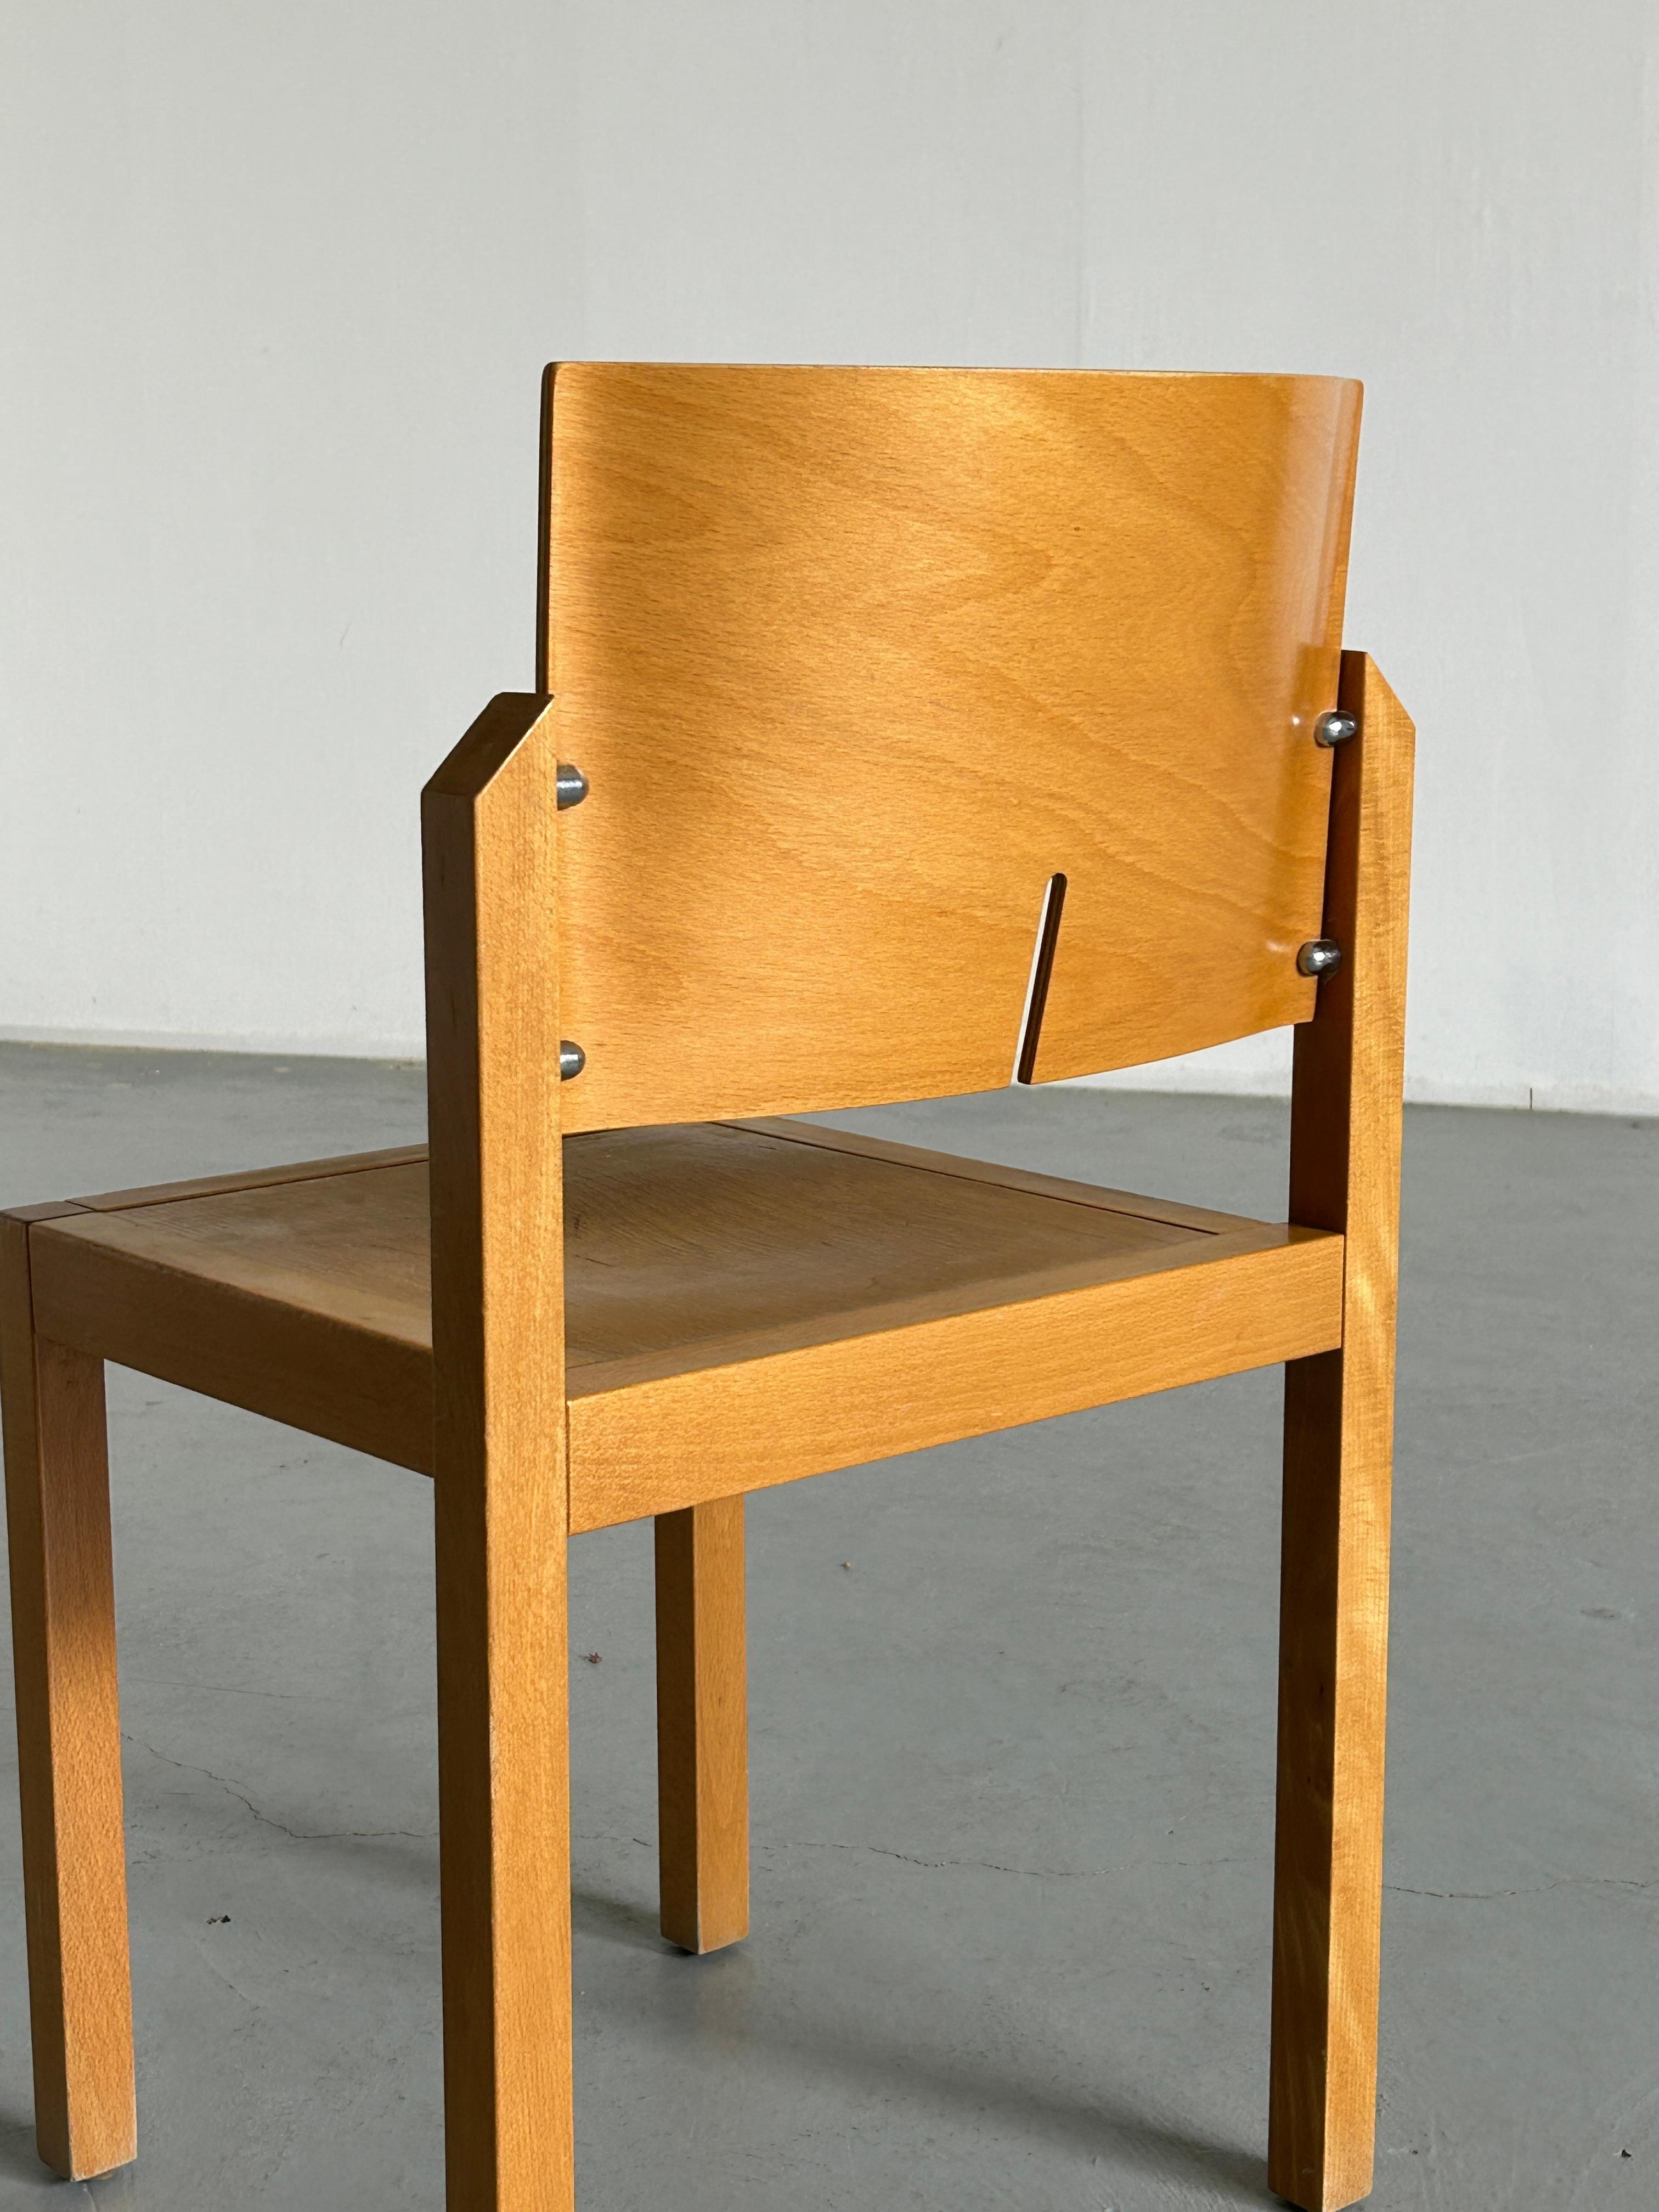 Thonet Postmodern Sculptural Wooden Chair, 1990s Austria For Sale 4